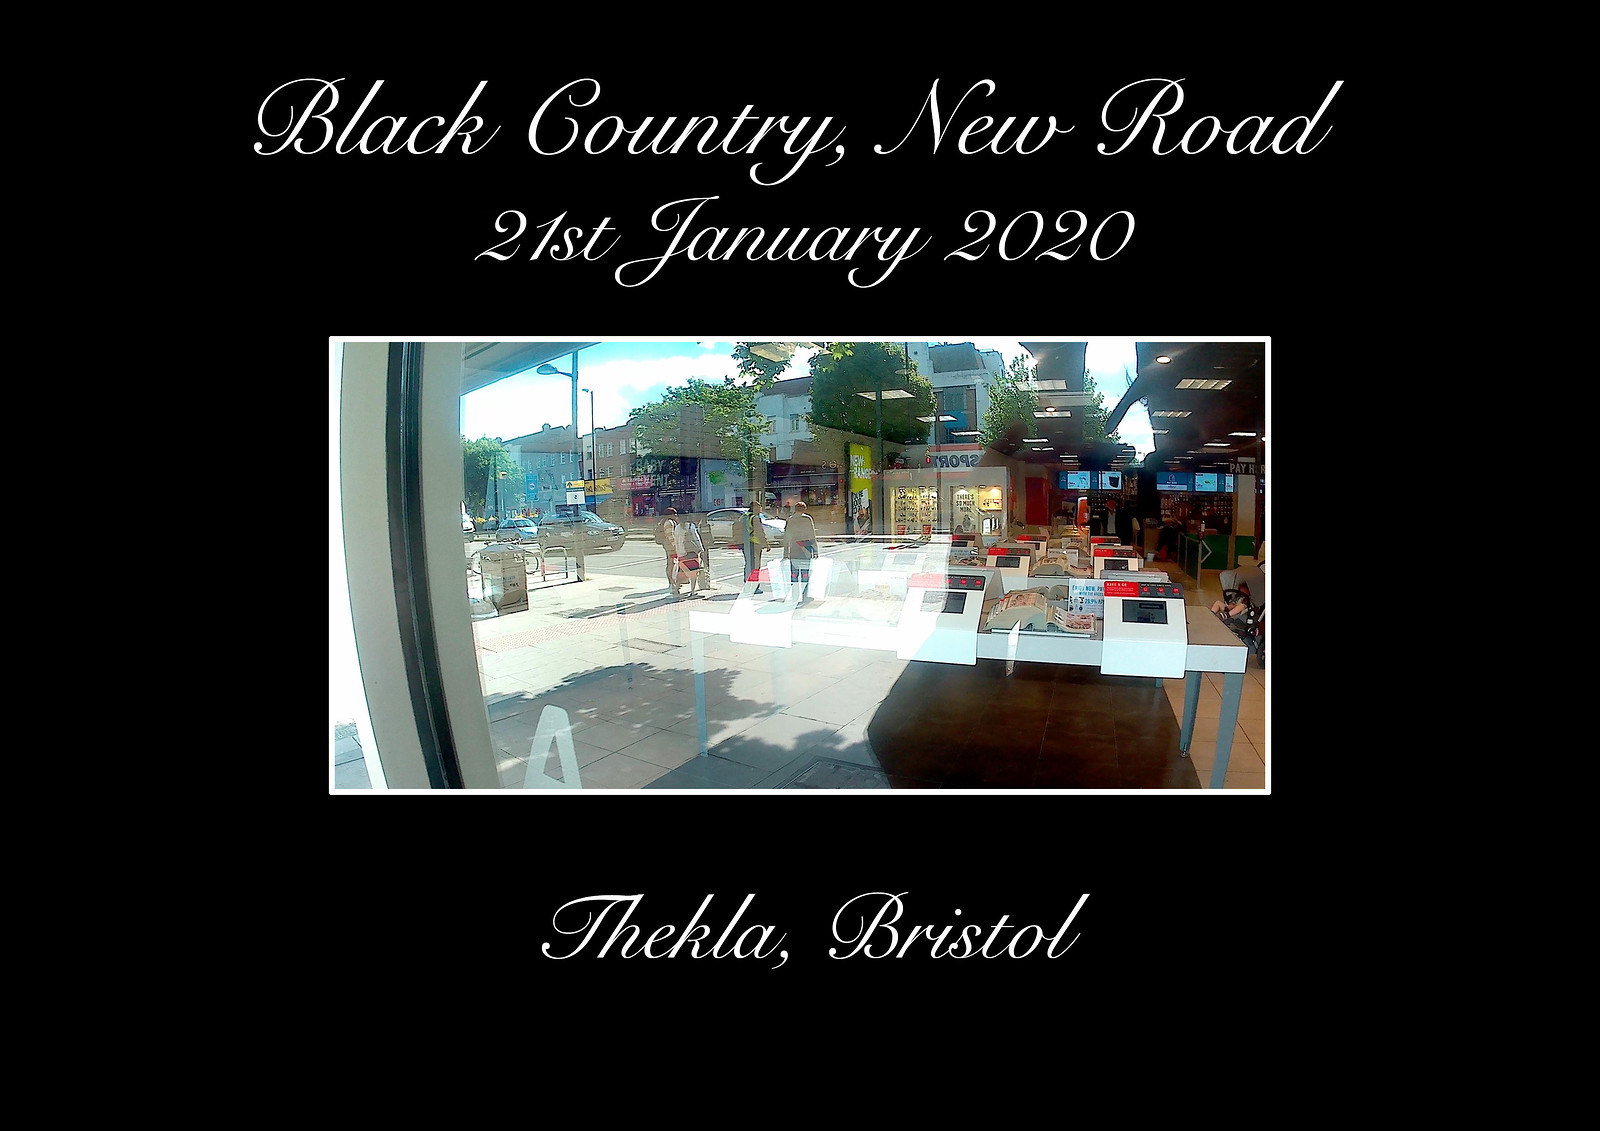 Black Country, New Road at Thekla